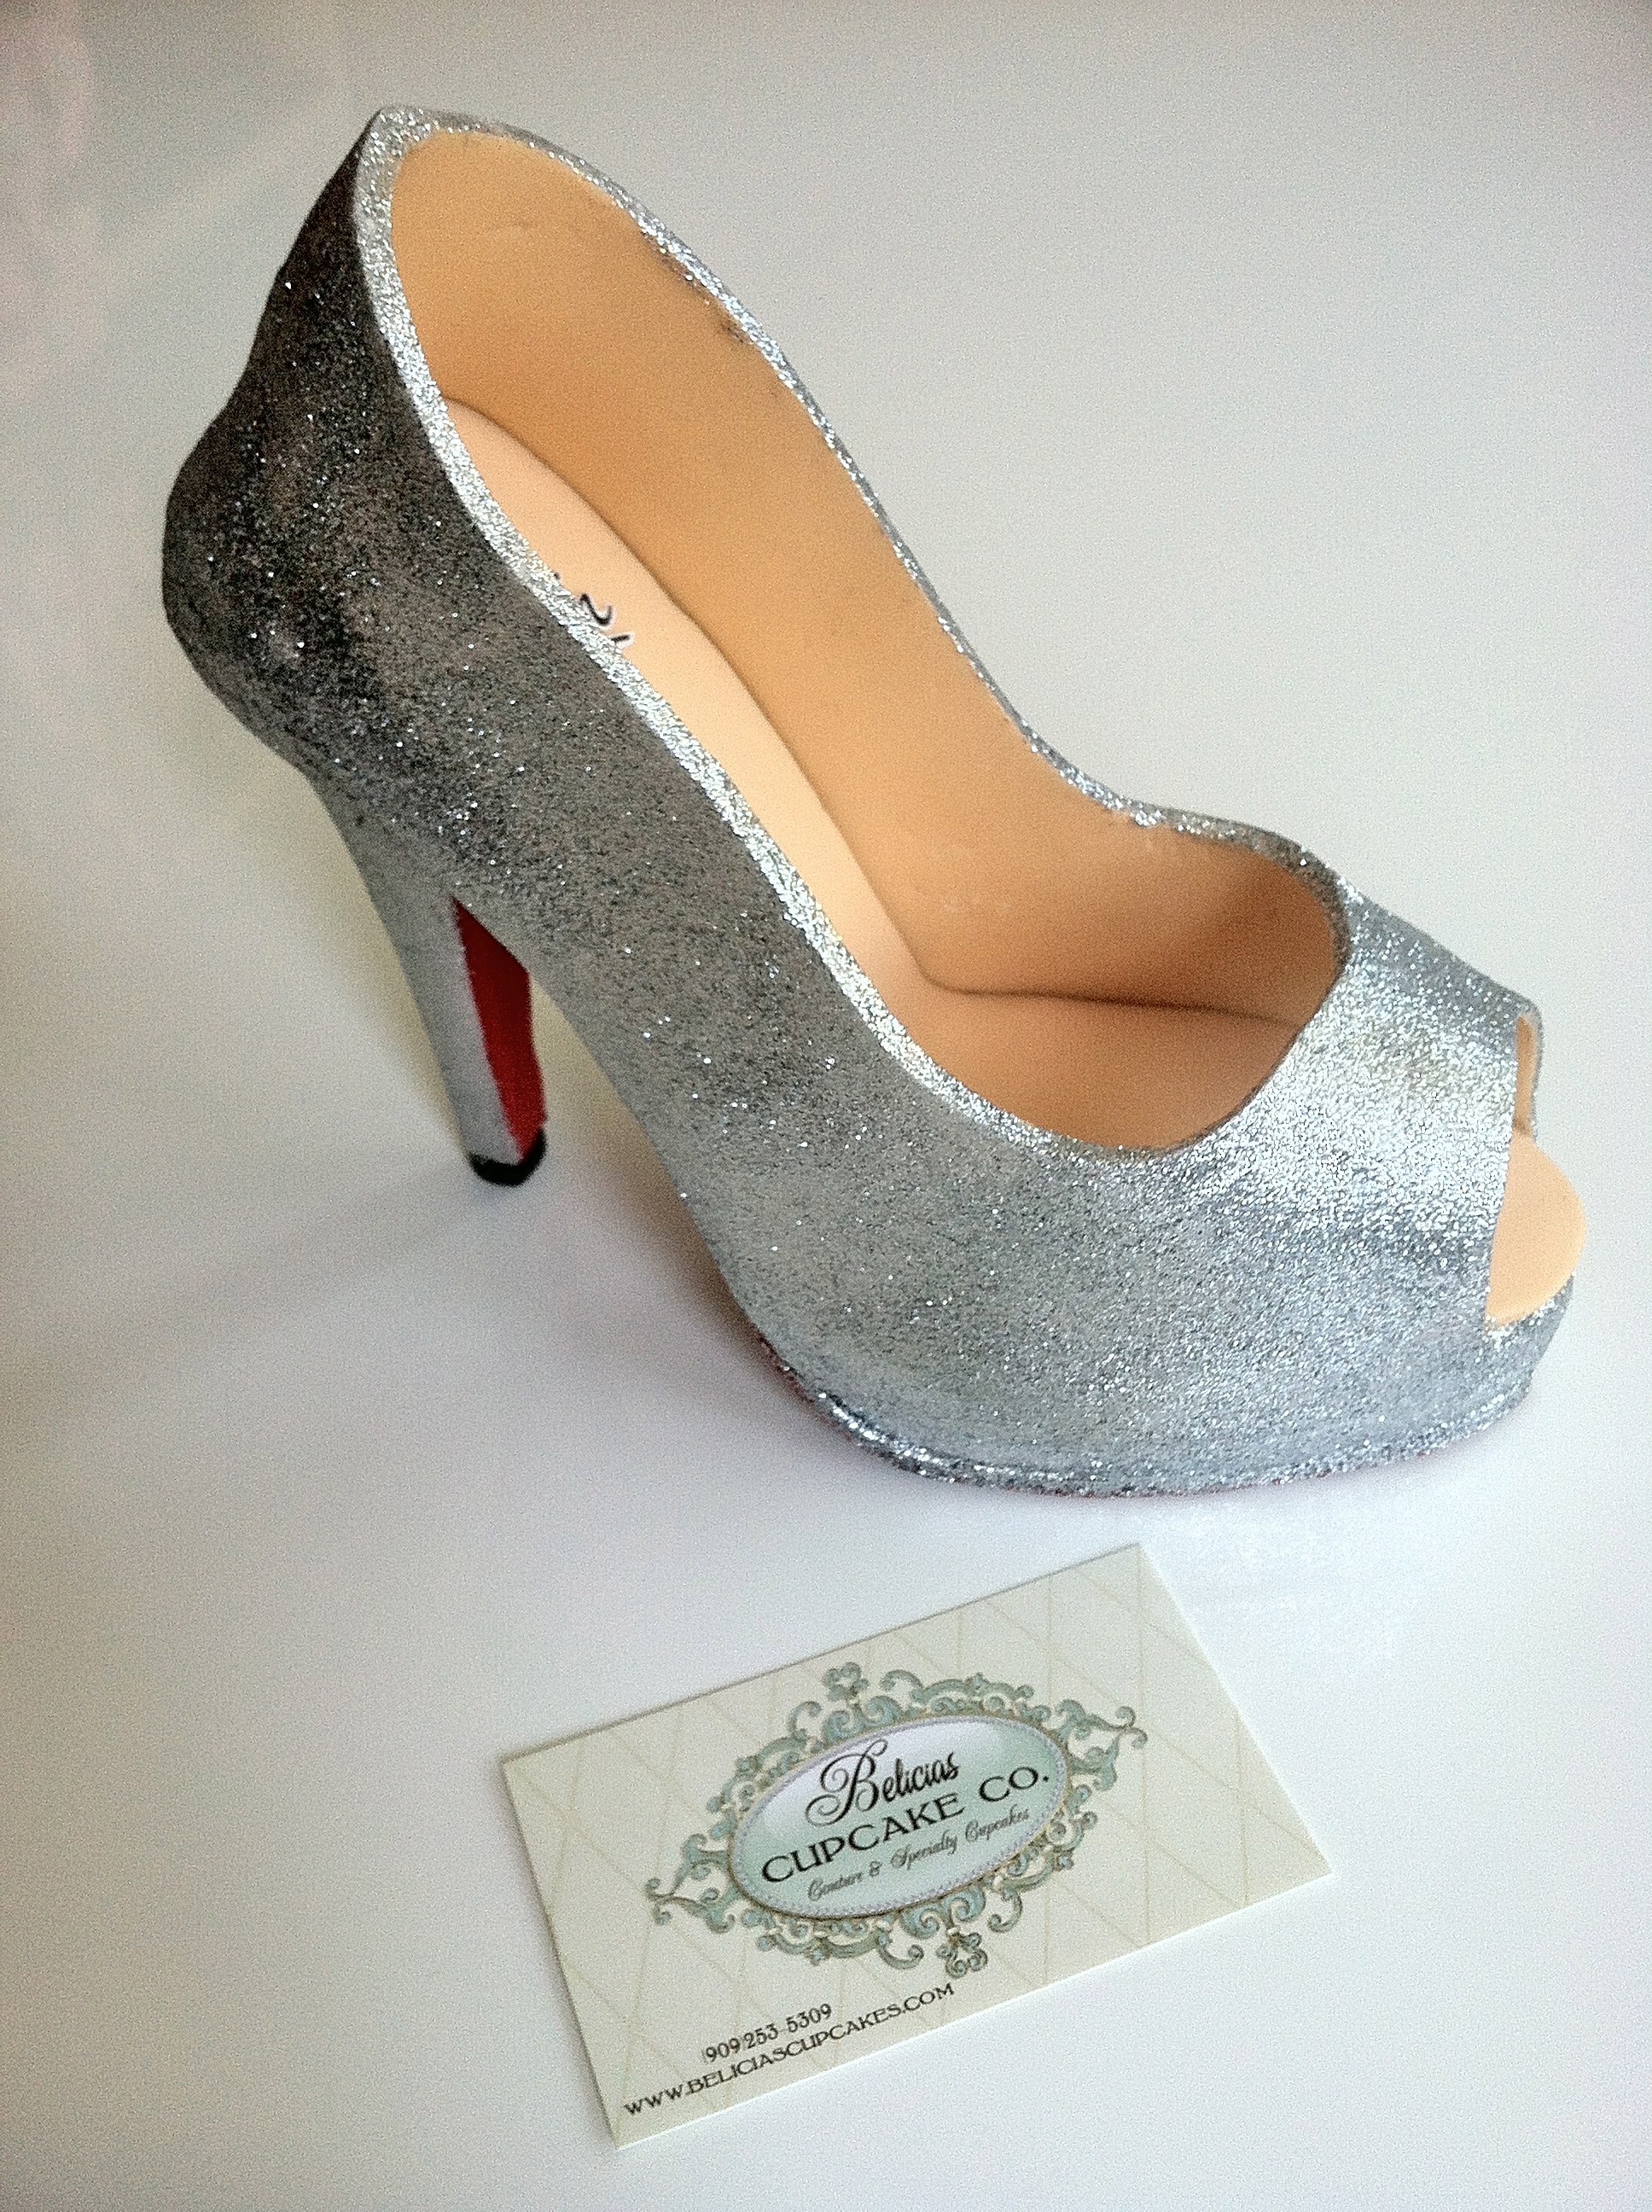 Fondant Shoe Christian Louboutin Inspired, Famous Glitter Stiletto ...